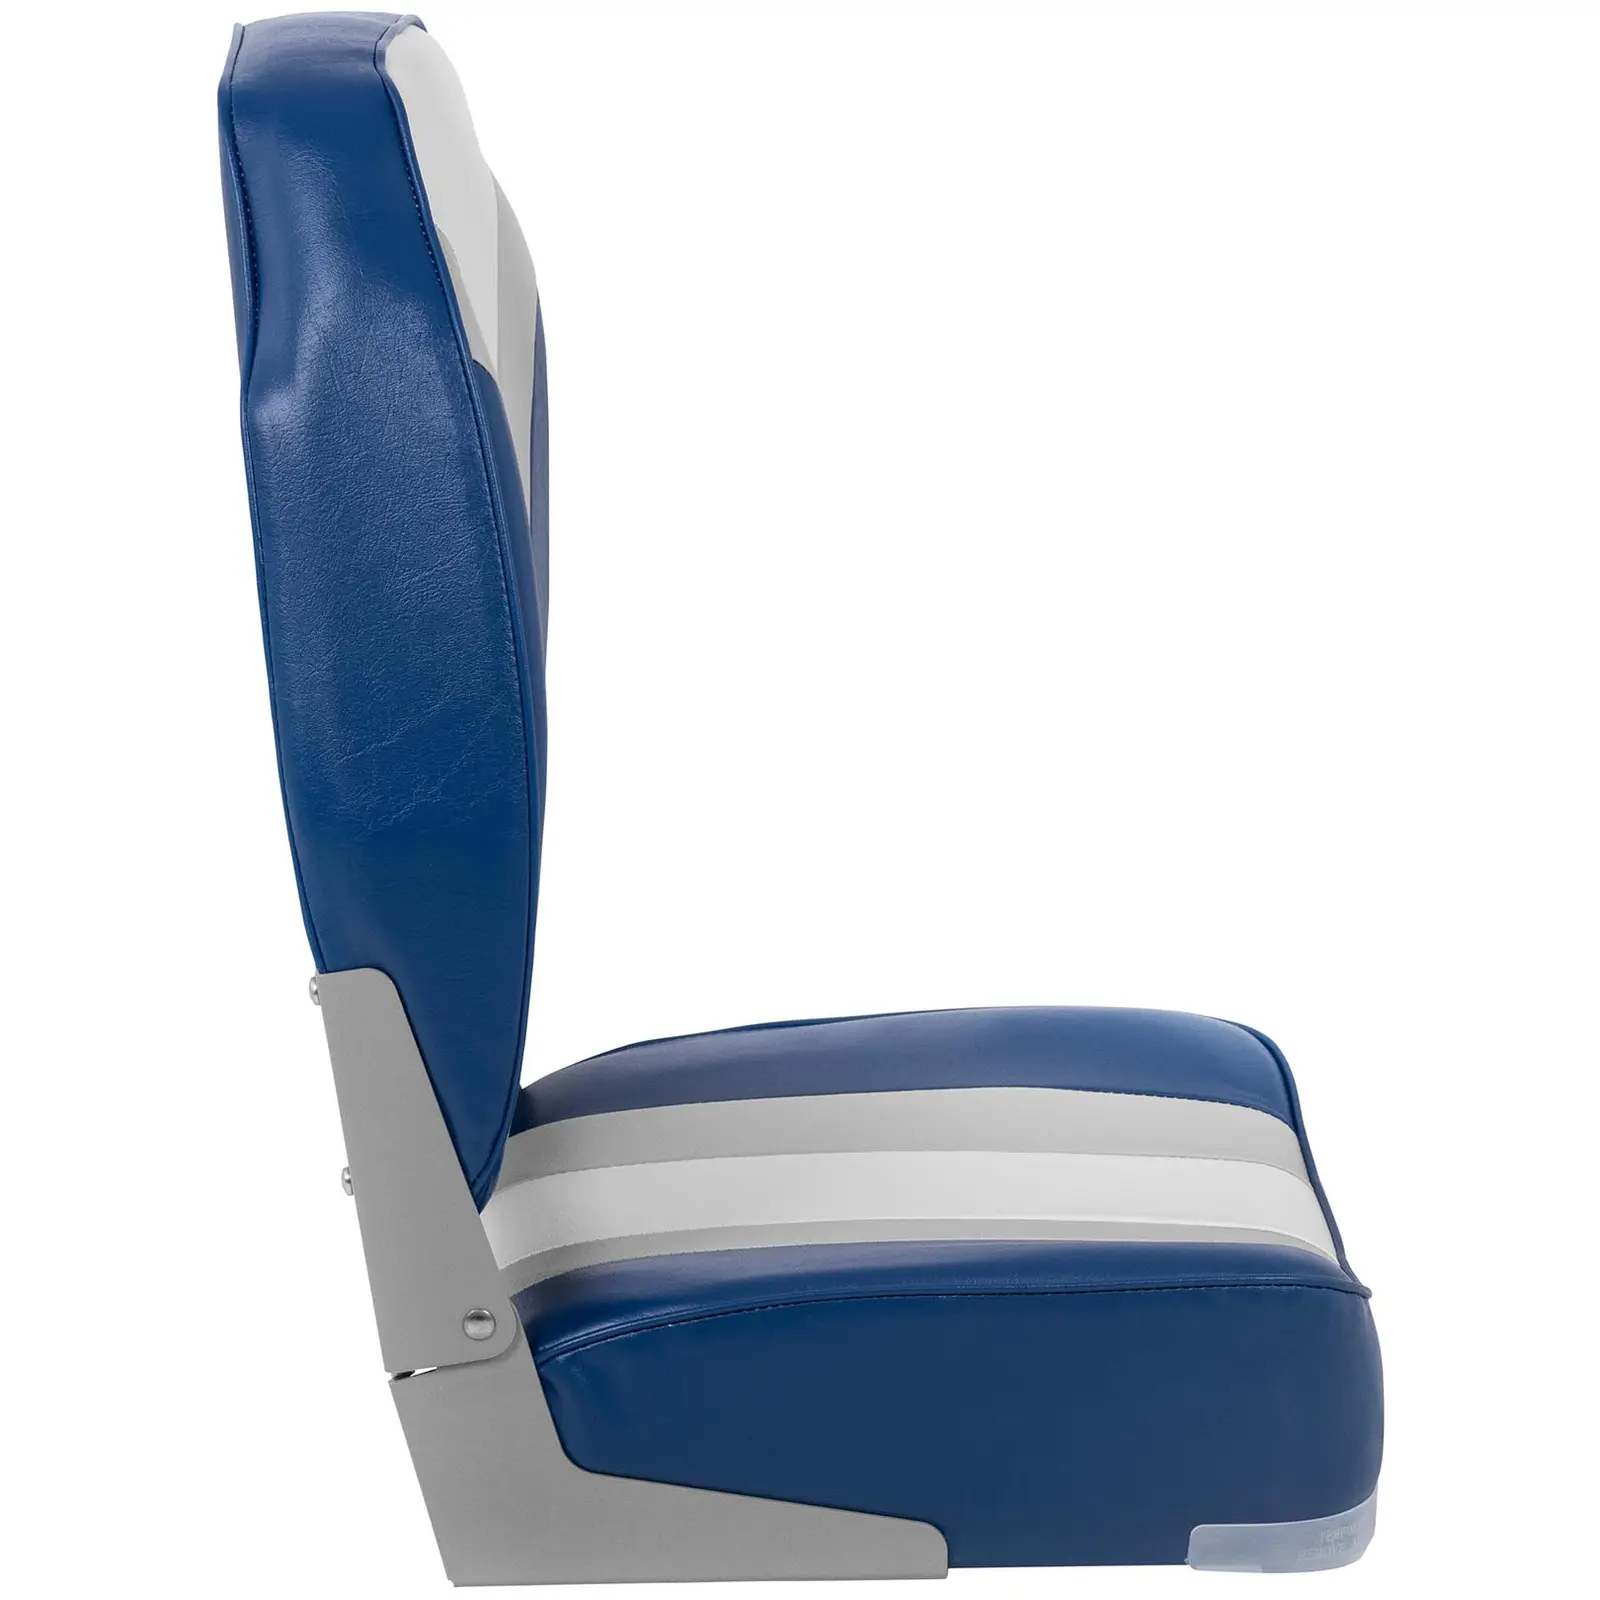 Valties sėdynė - 36x43x60 cm - Mėlyna, tamsiai pilka, balta